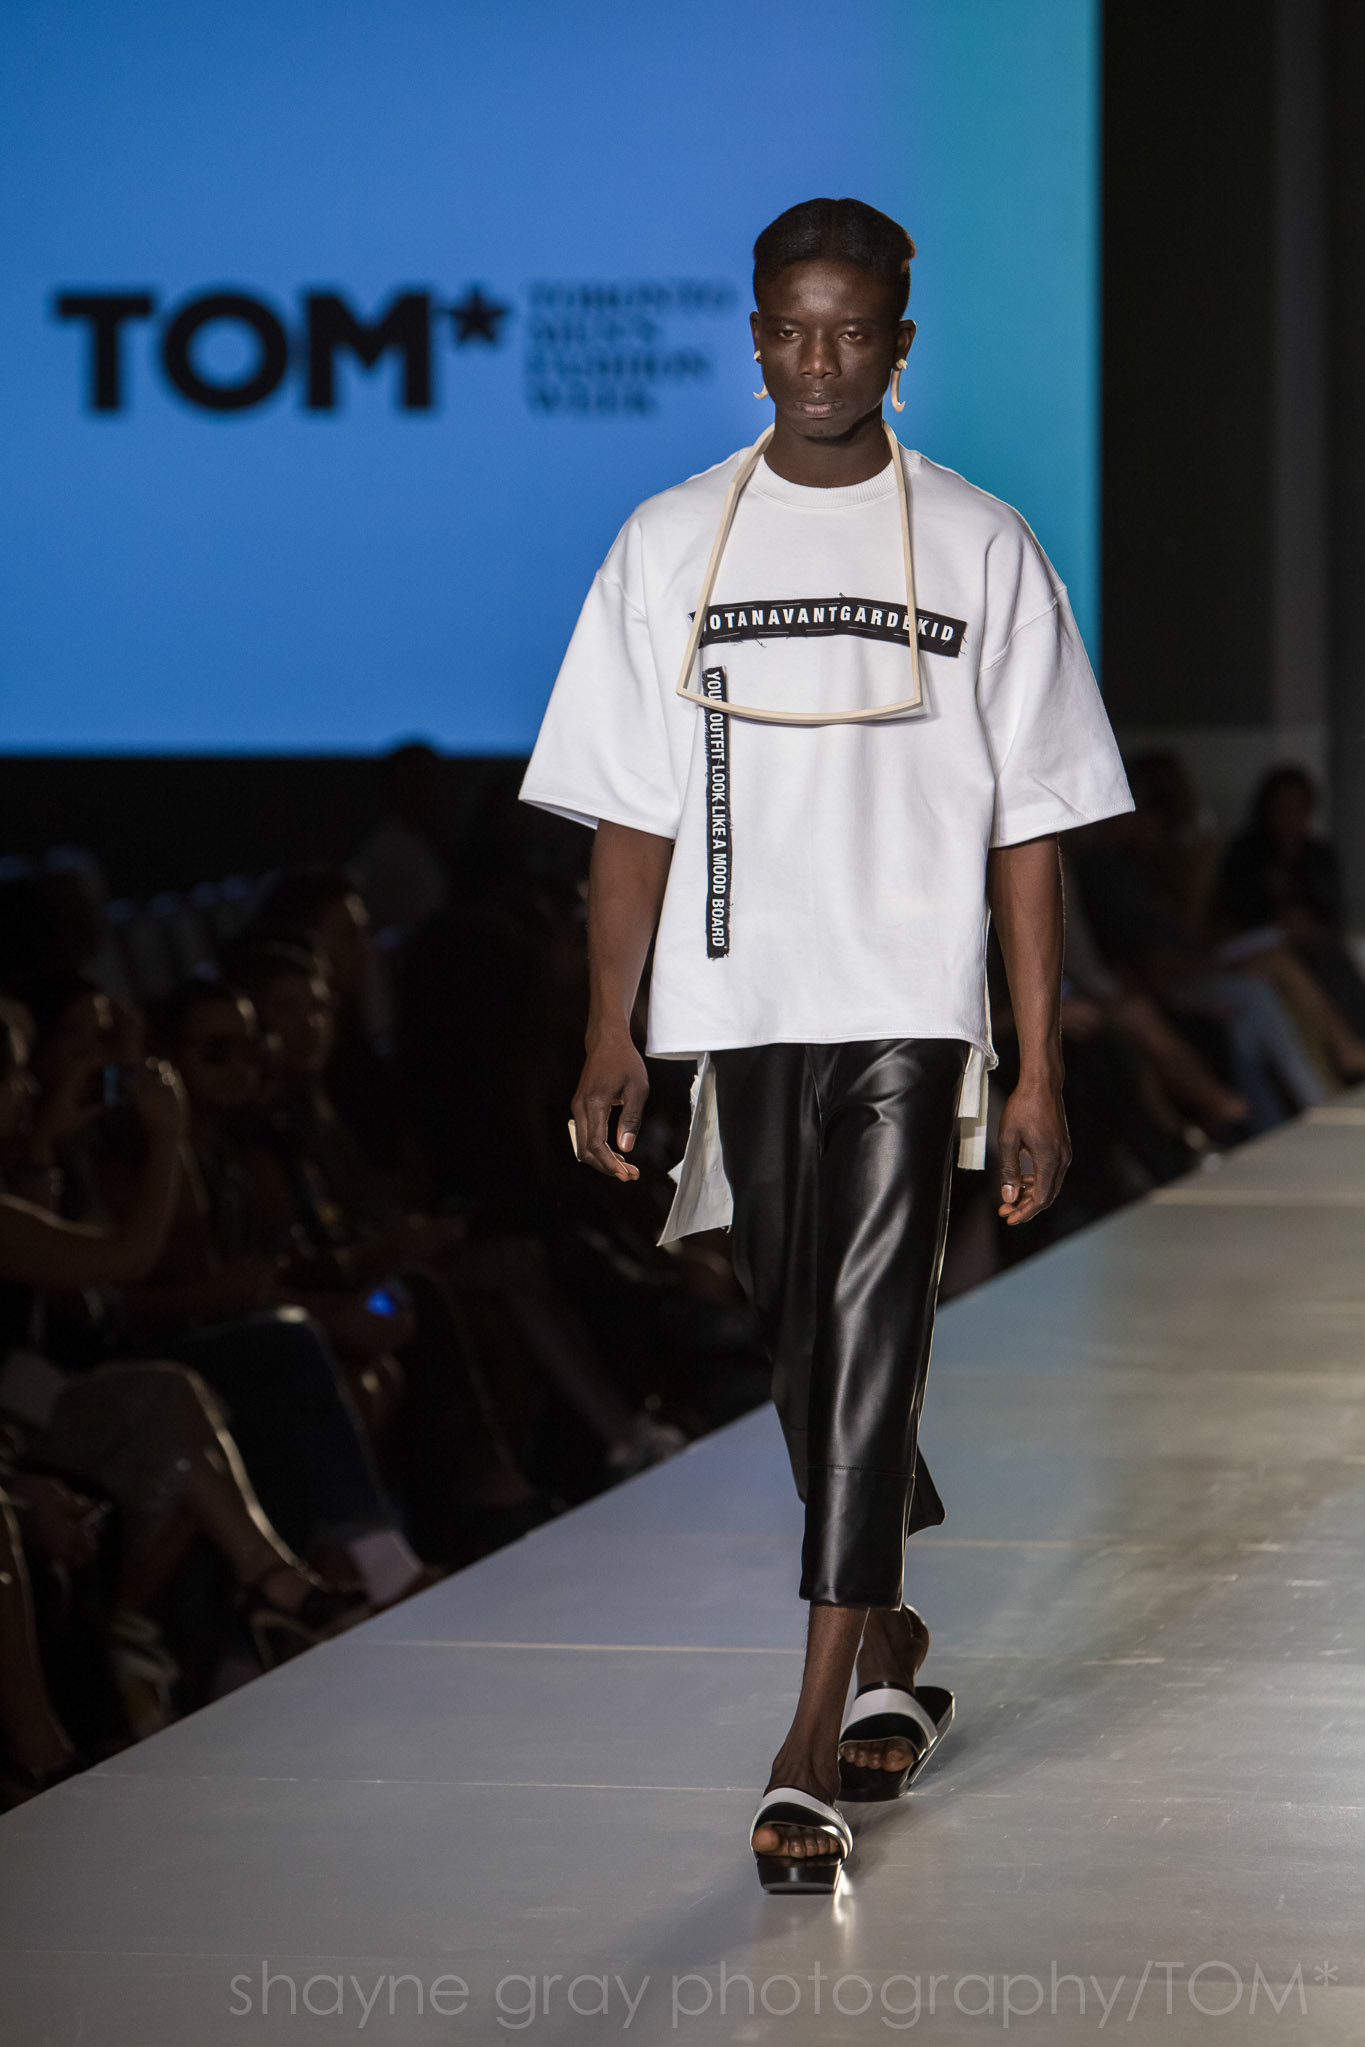 Shayne-Gray-Toronto-men's-fashion_week-TOM-wrkdept-8683.jpg